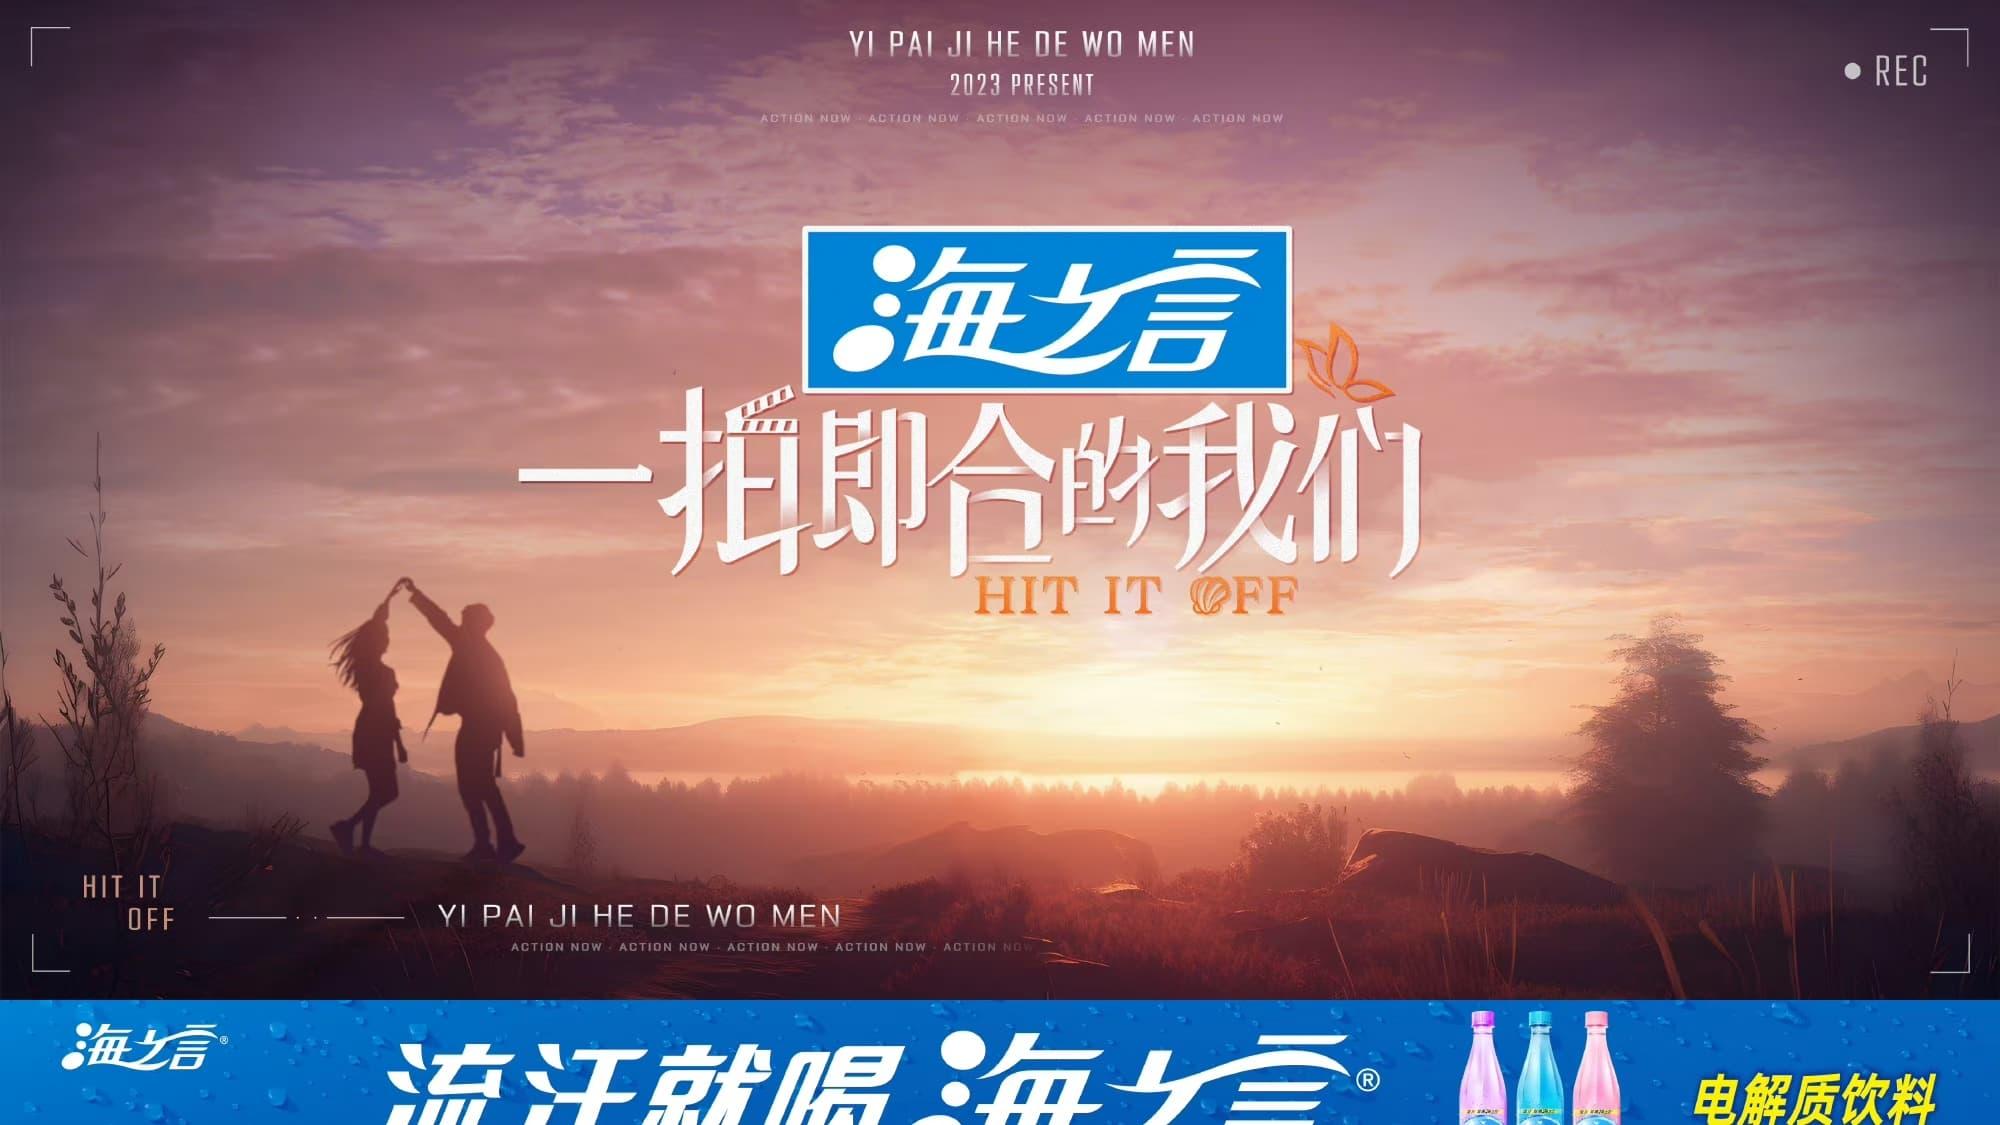 Zhang Yishan backdrop